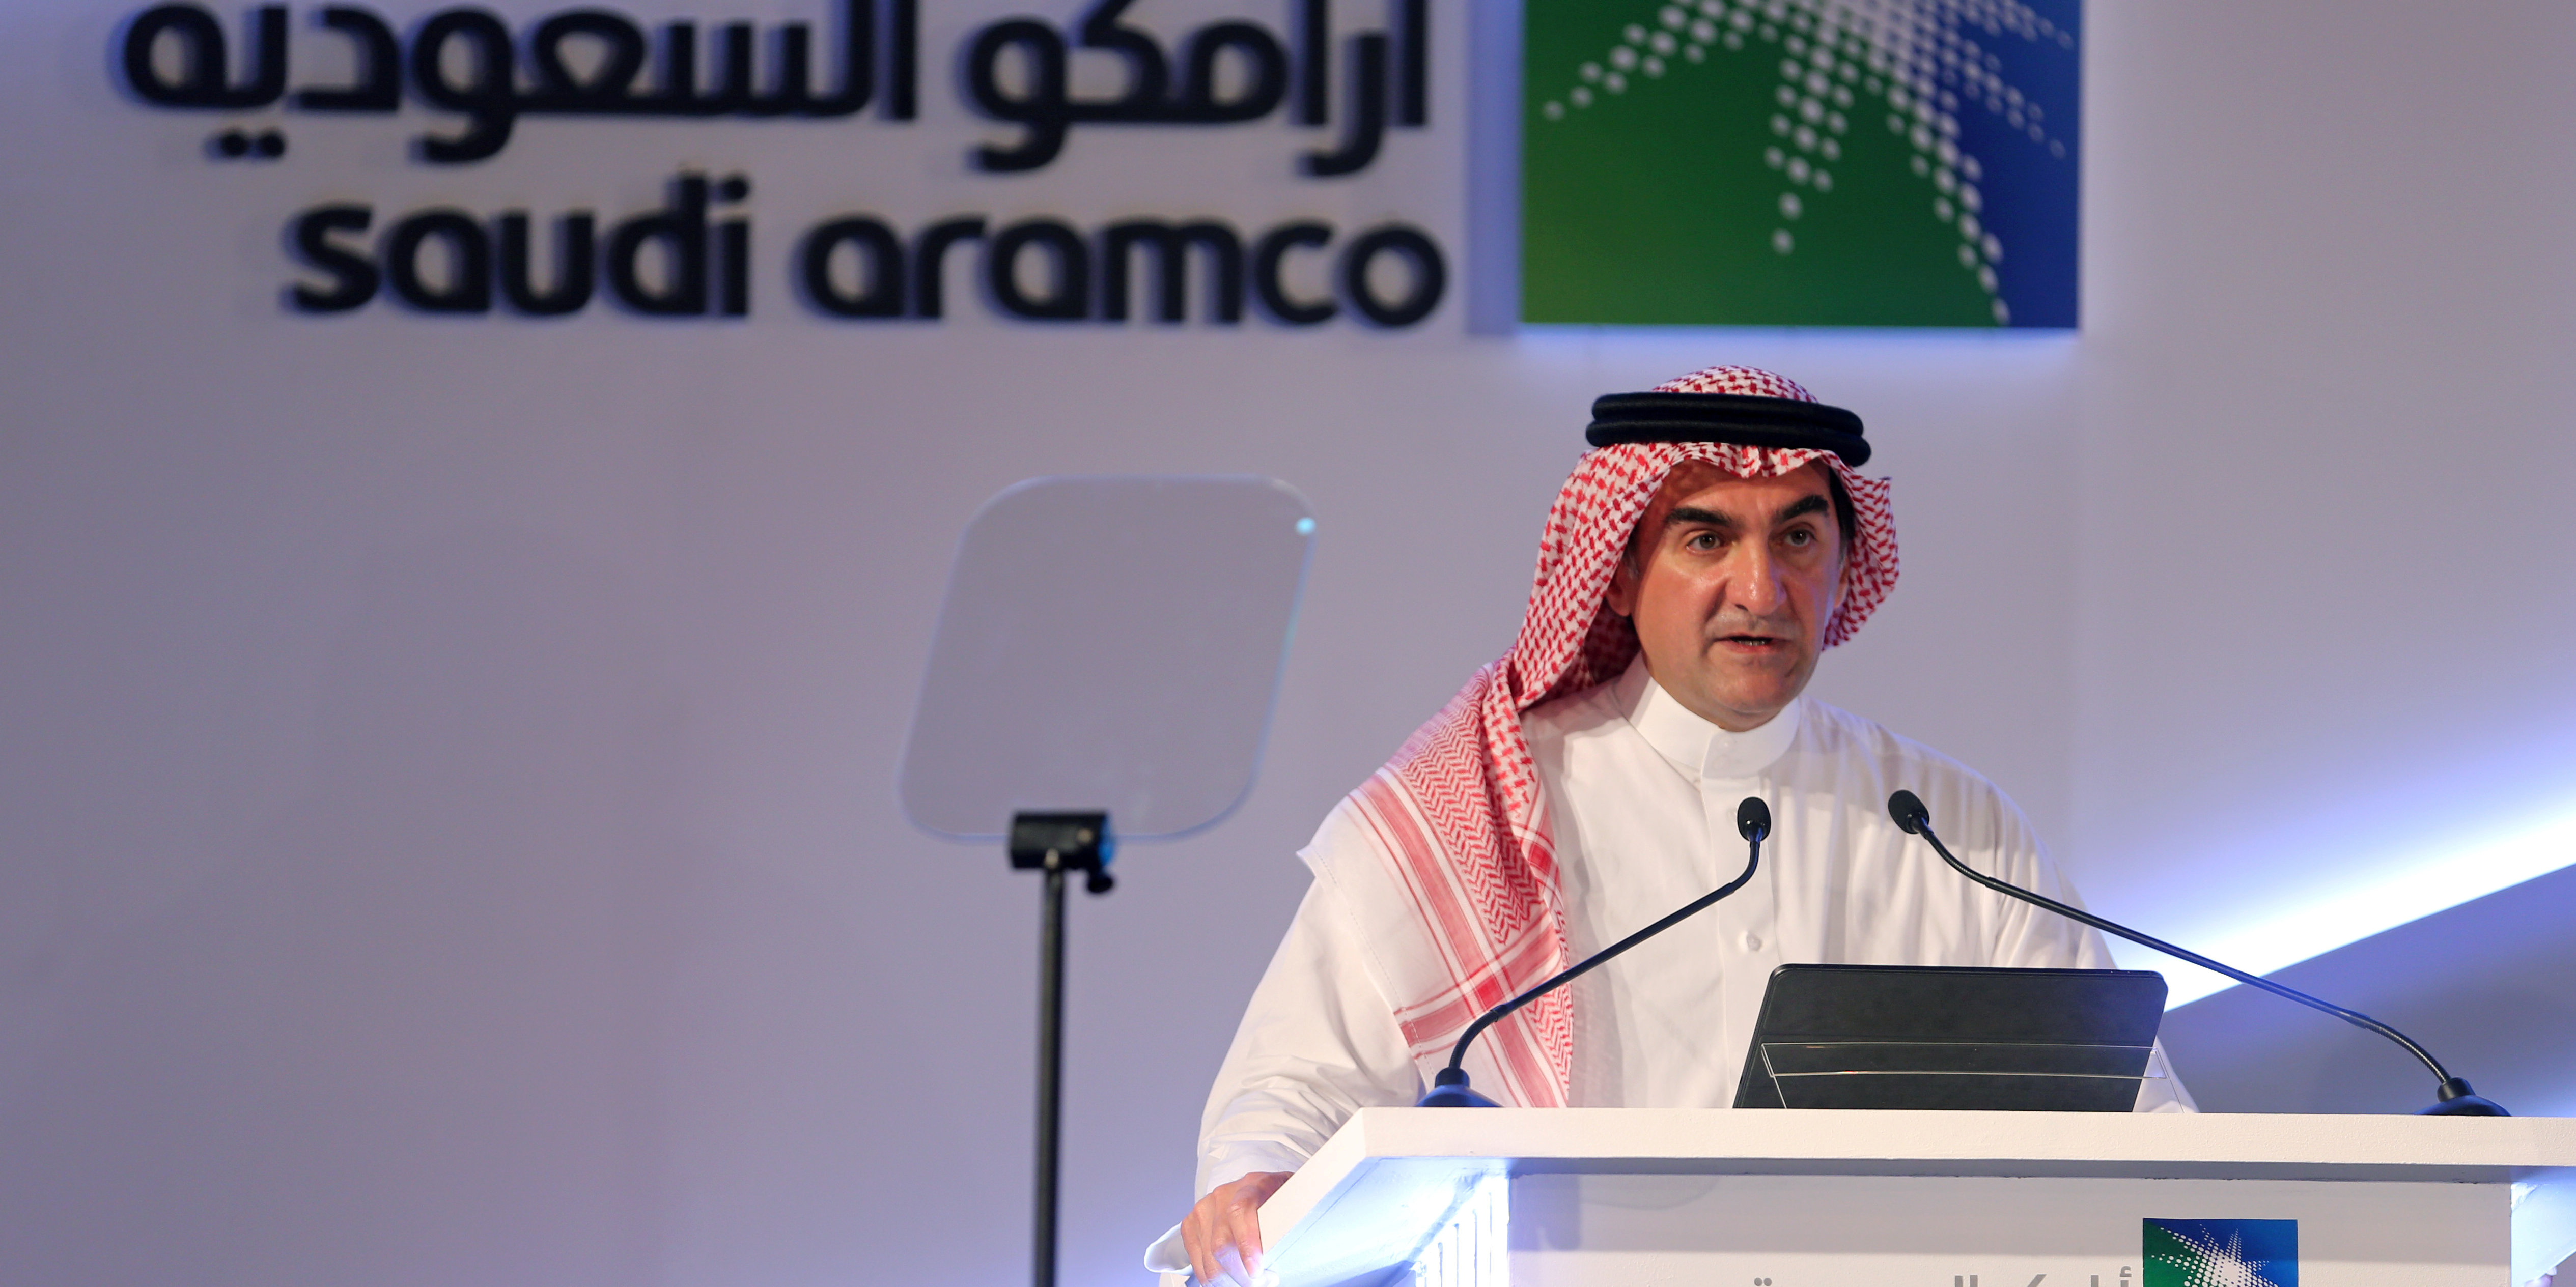 yasser-al-rumayyan-president-de-saudi-aramco-durant-une-conference-de-presse-le-3-novembre-2019